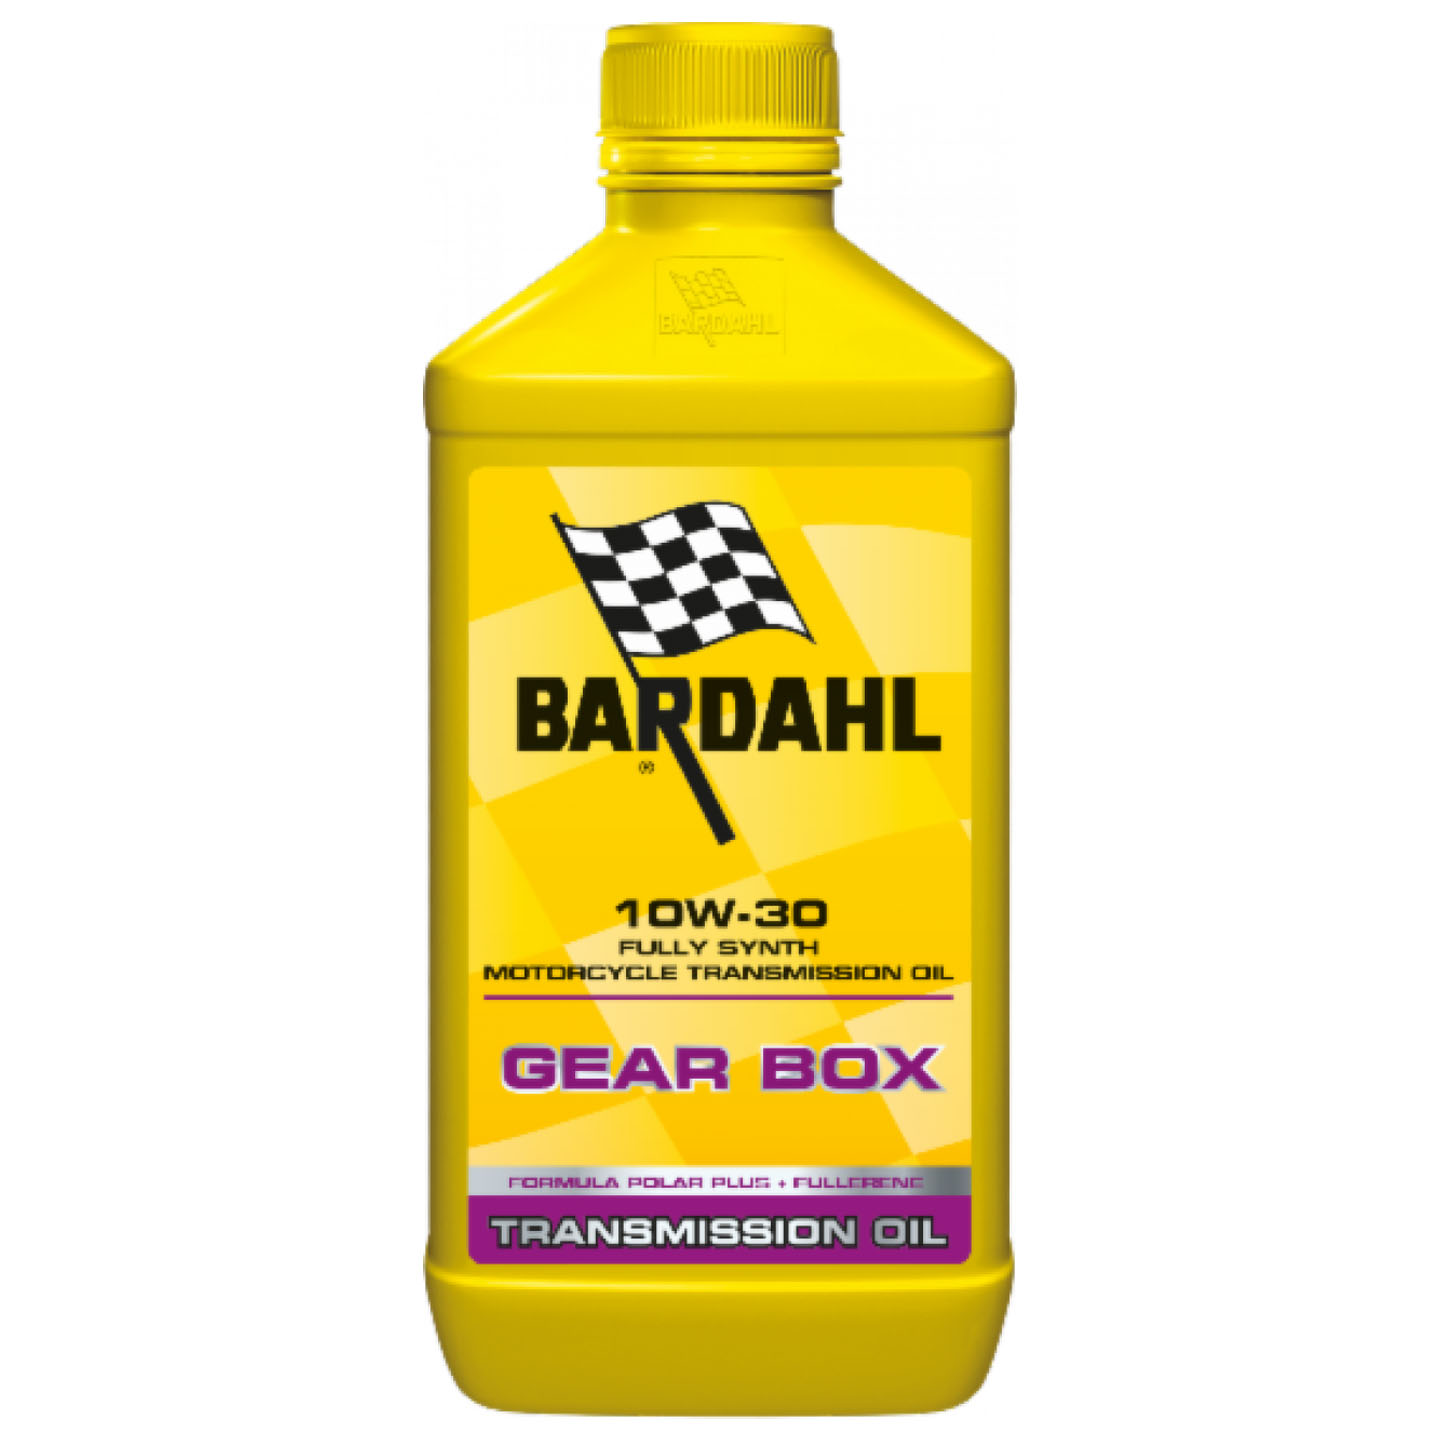 Cod. 402041 - BARDAHL GEARBOX 10W30